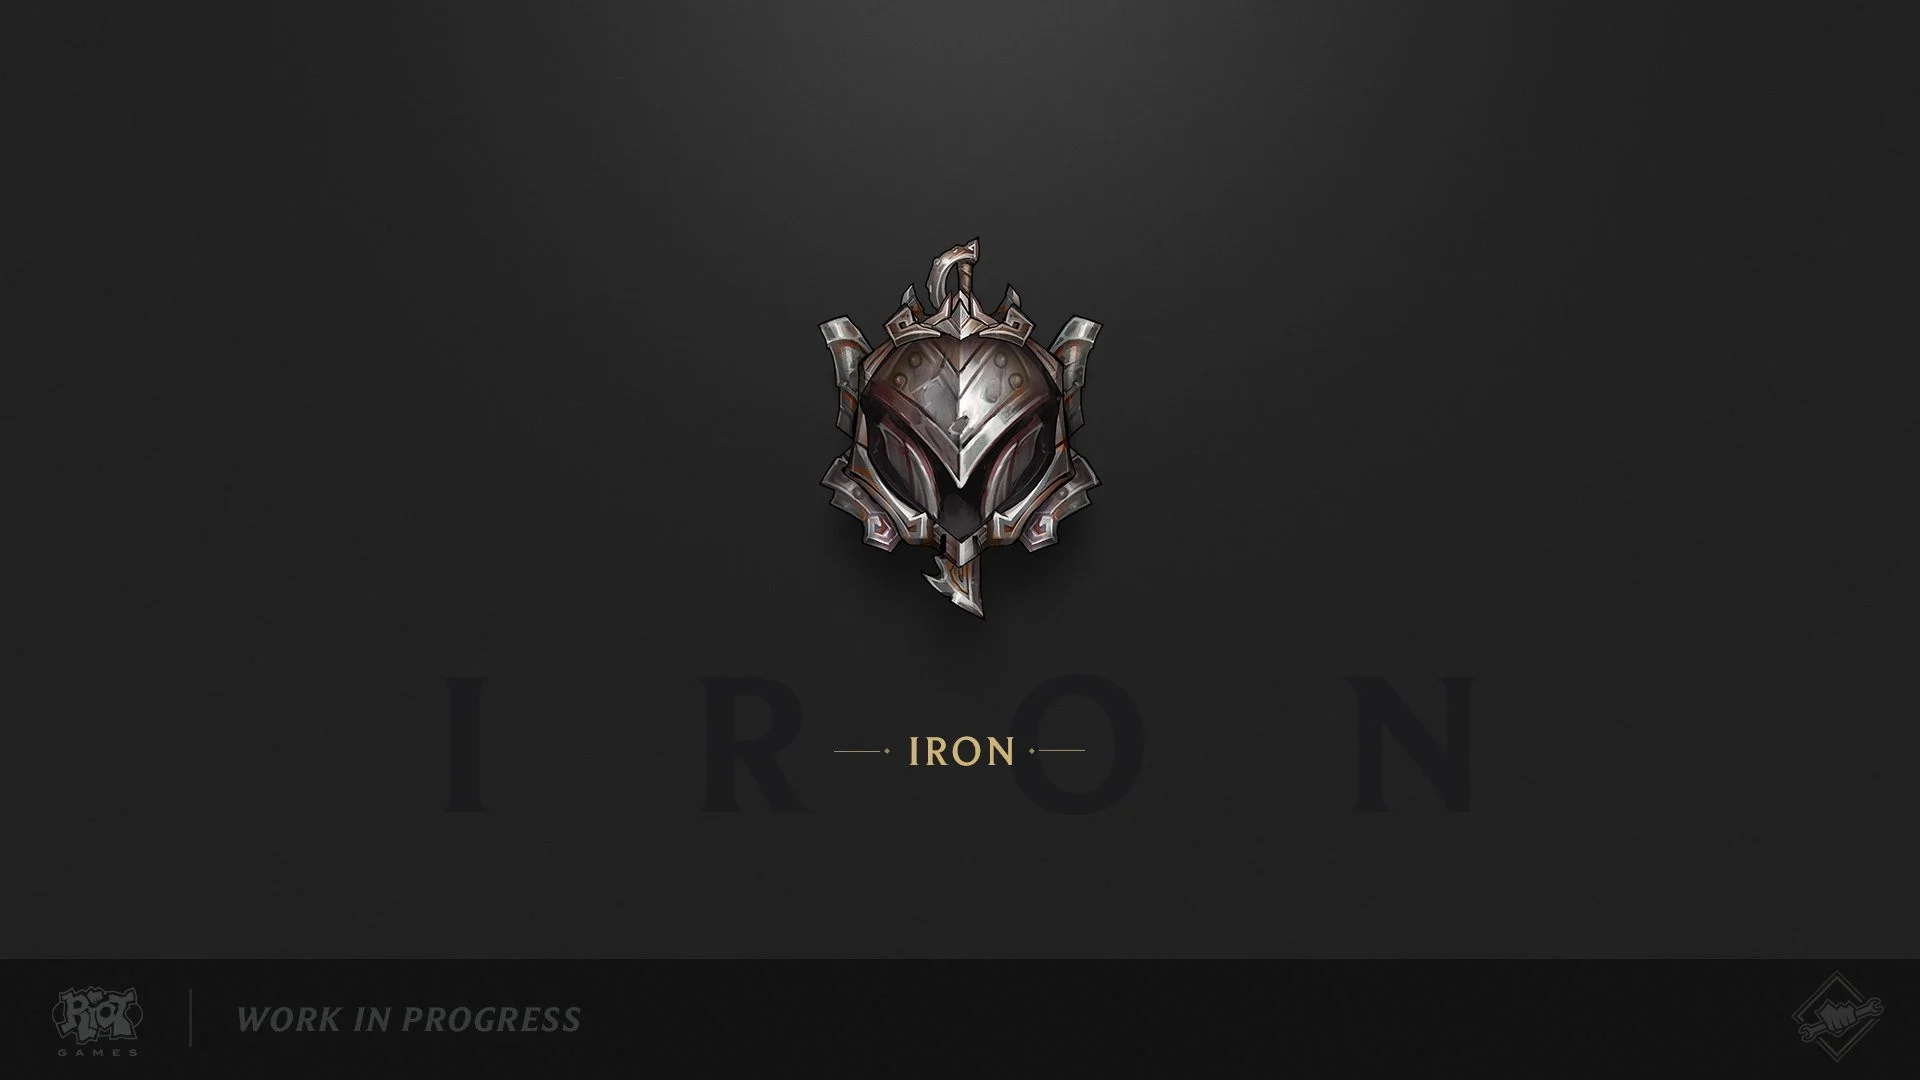 NA [UNK] Iron IV [UNK] Hand De-ranked [UNK] Full Access + Unverified [UNK] 36K BE